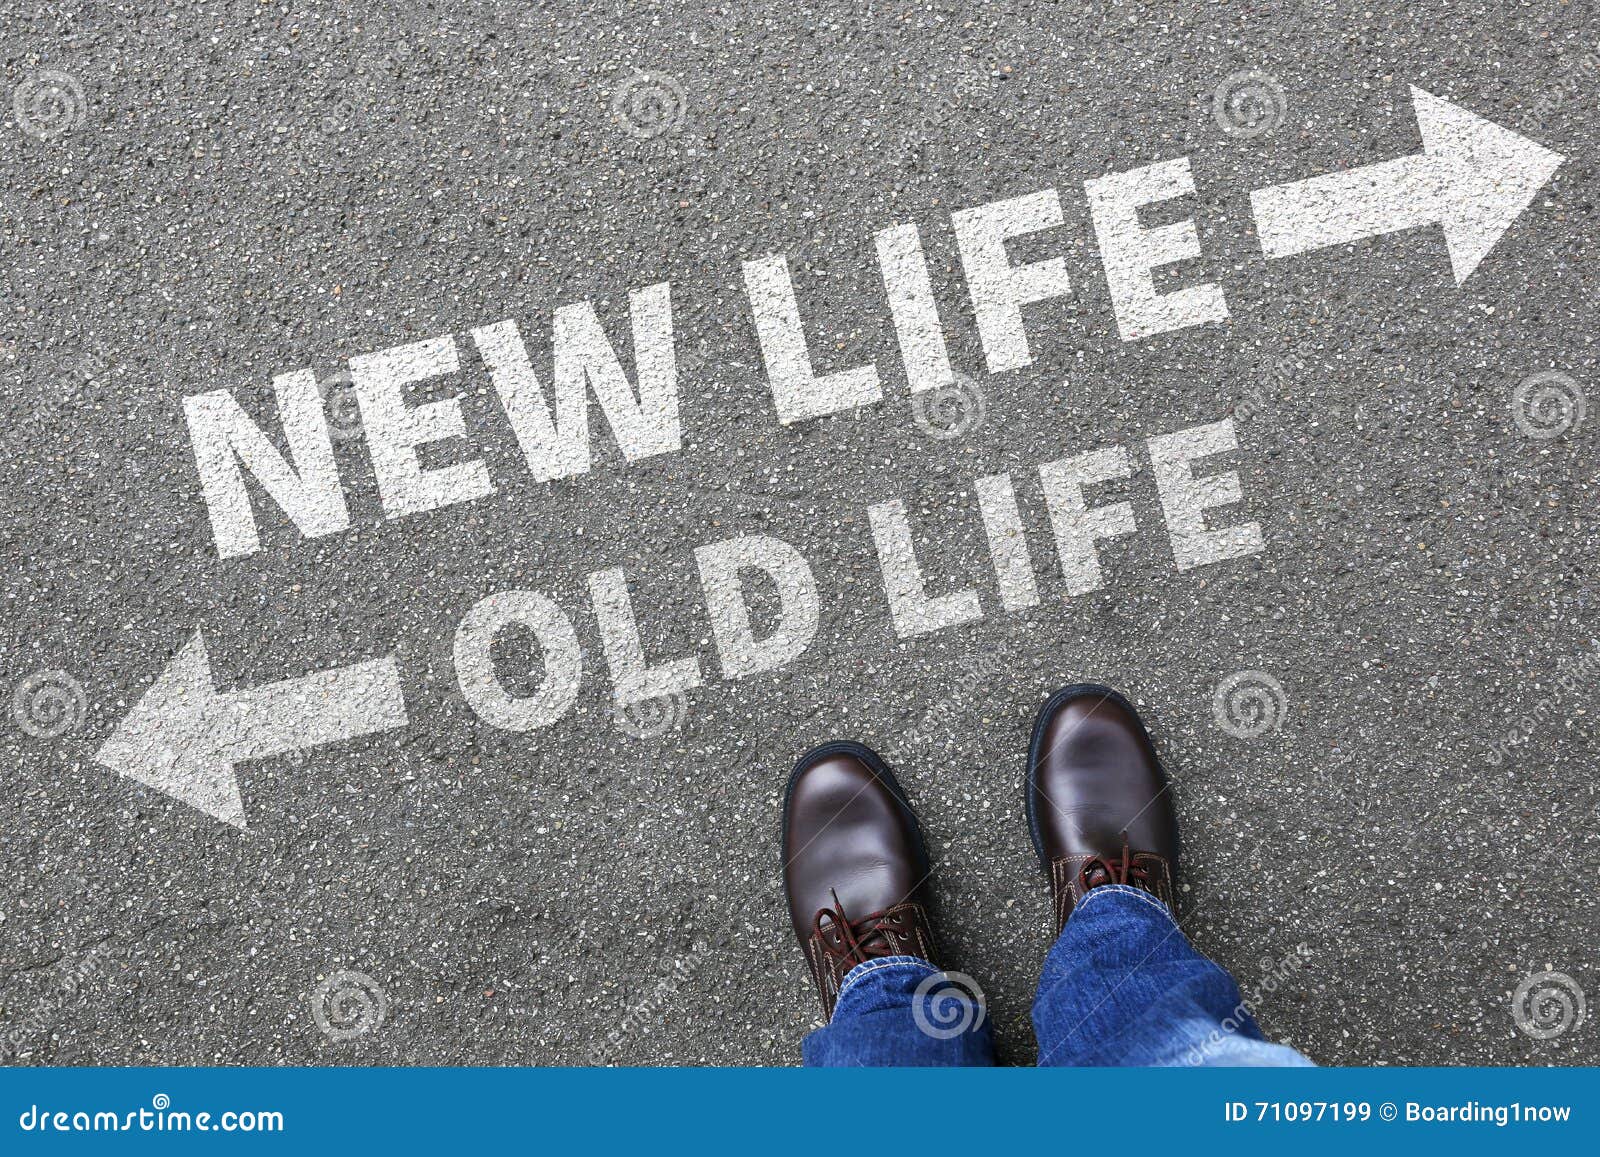 old new life future past goals success decision change